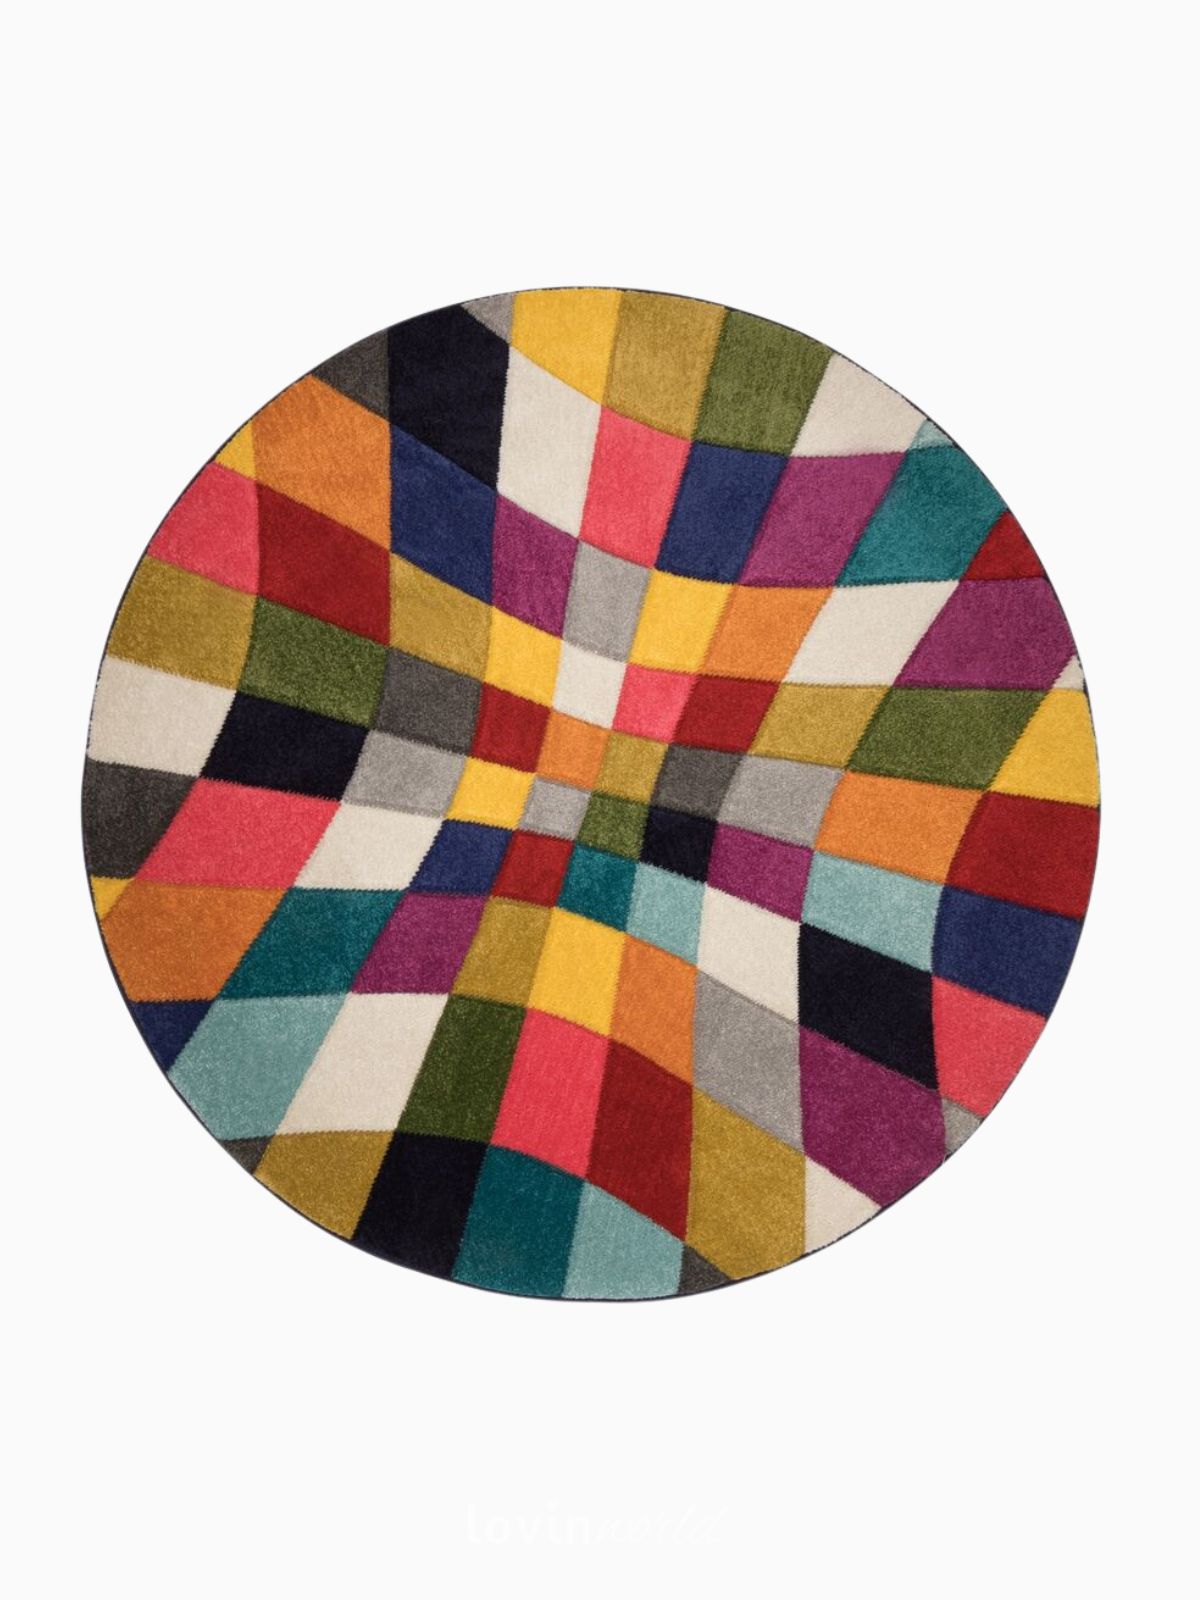 Tappeto rotondo moderno Rhumba in polipropilene, multicolore 160x160 cm.-1